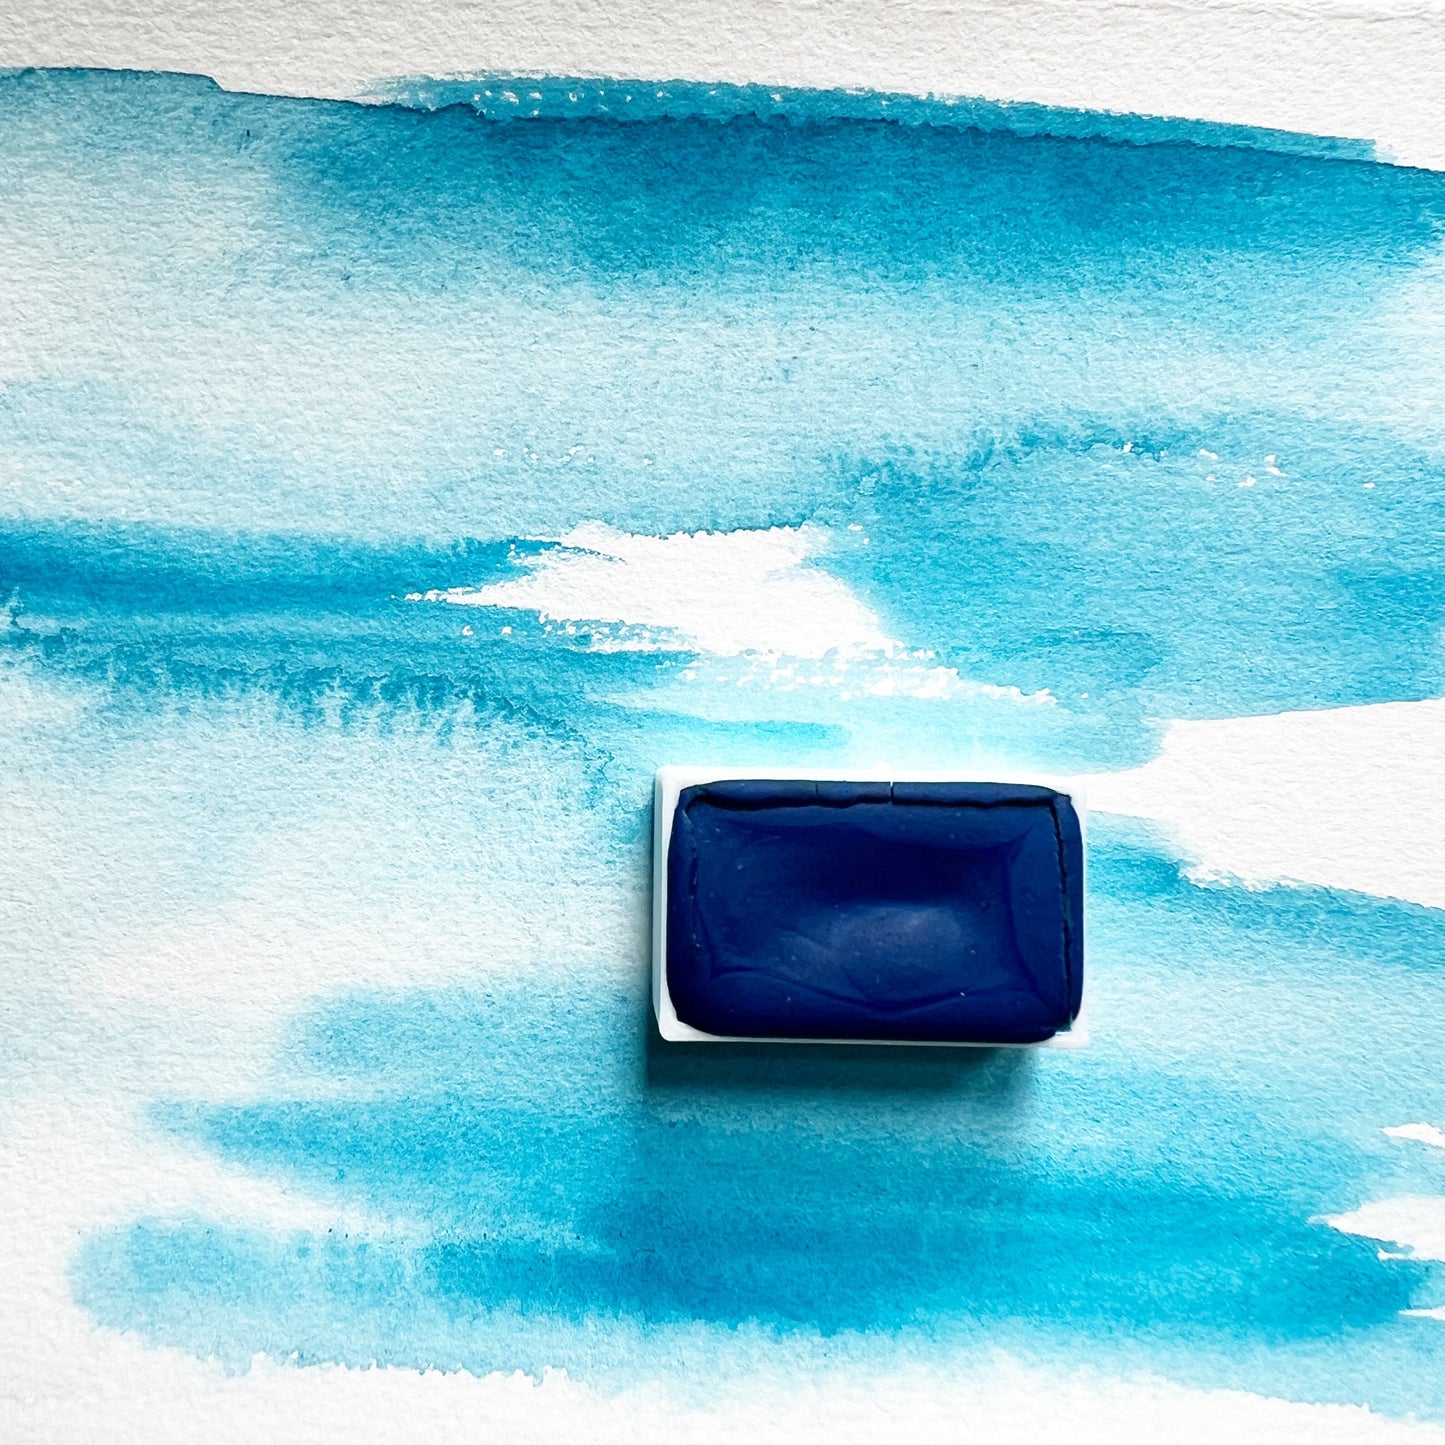 Primary Blue. Half pan or bottle cap of handmade watercolor paint